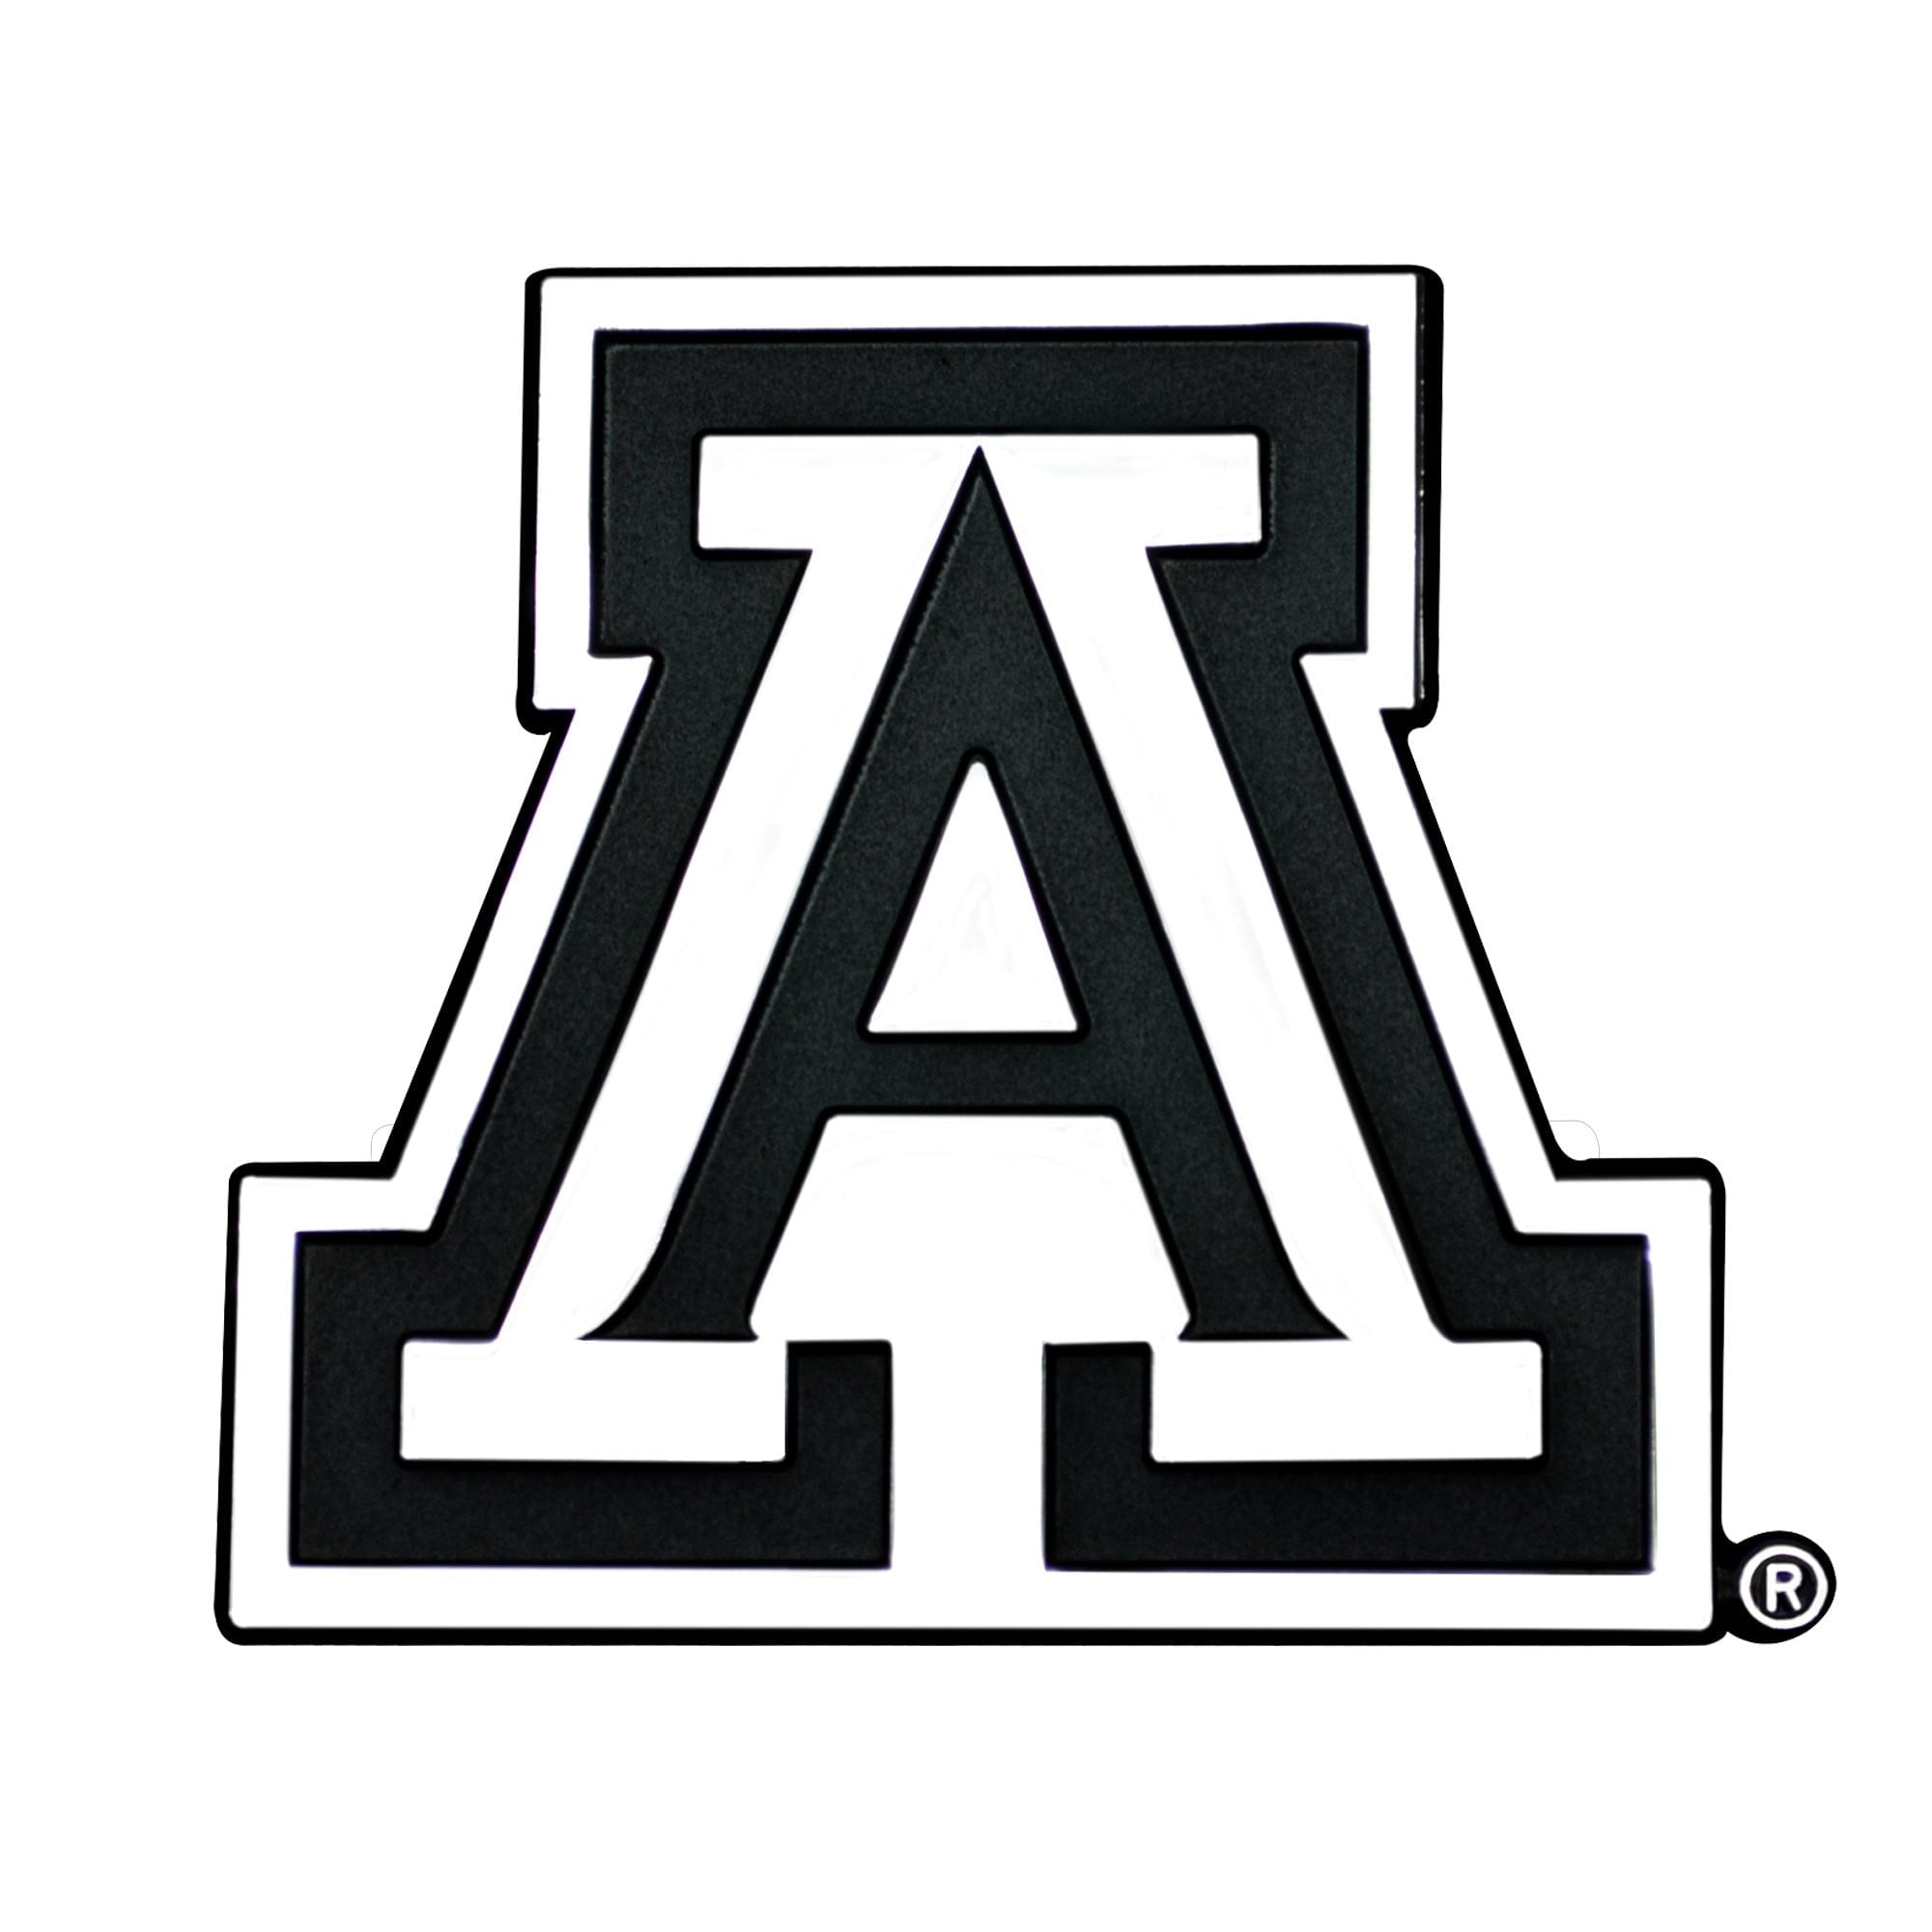 Arizona Wildcats 3D Chrome Emblem